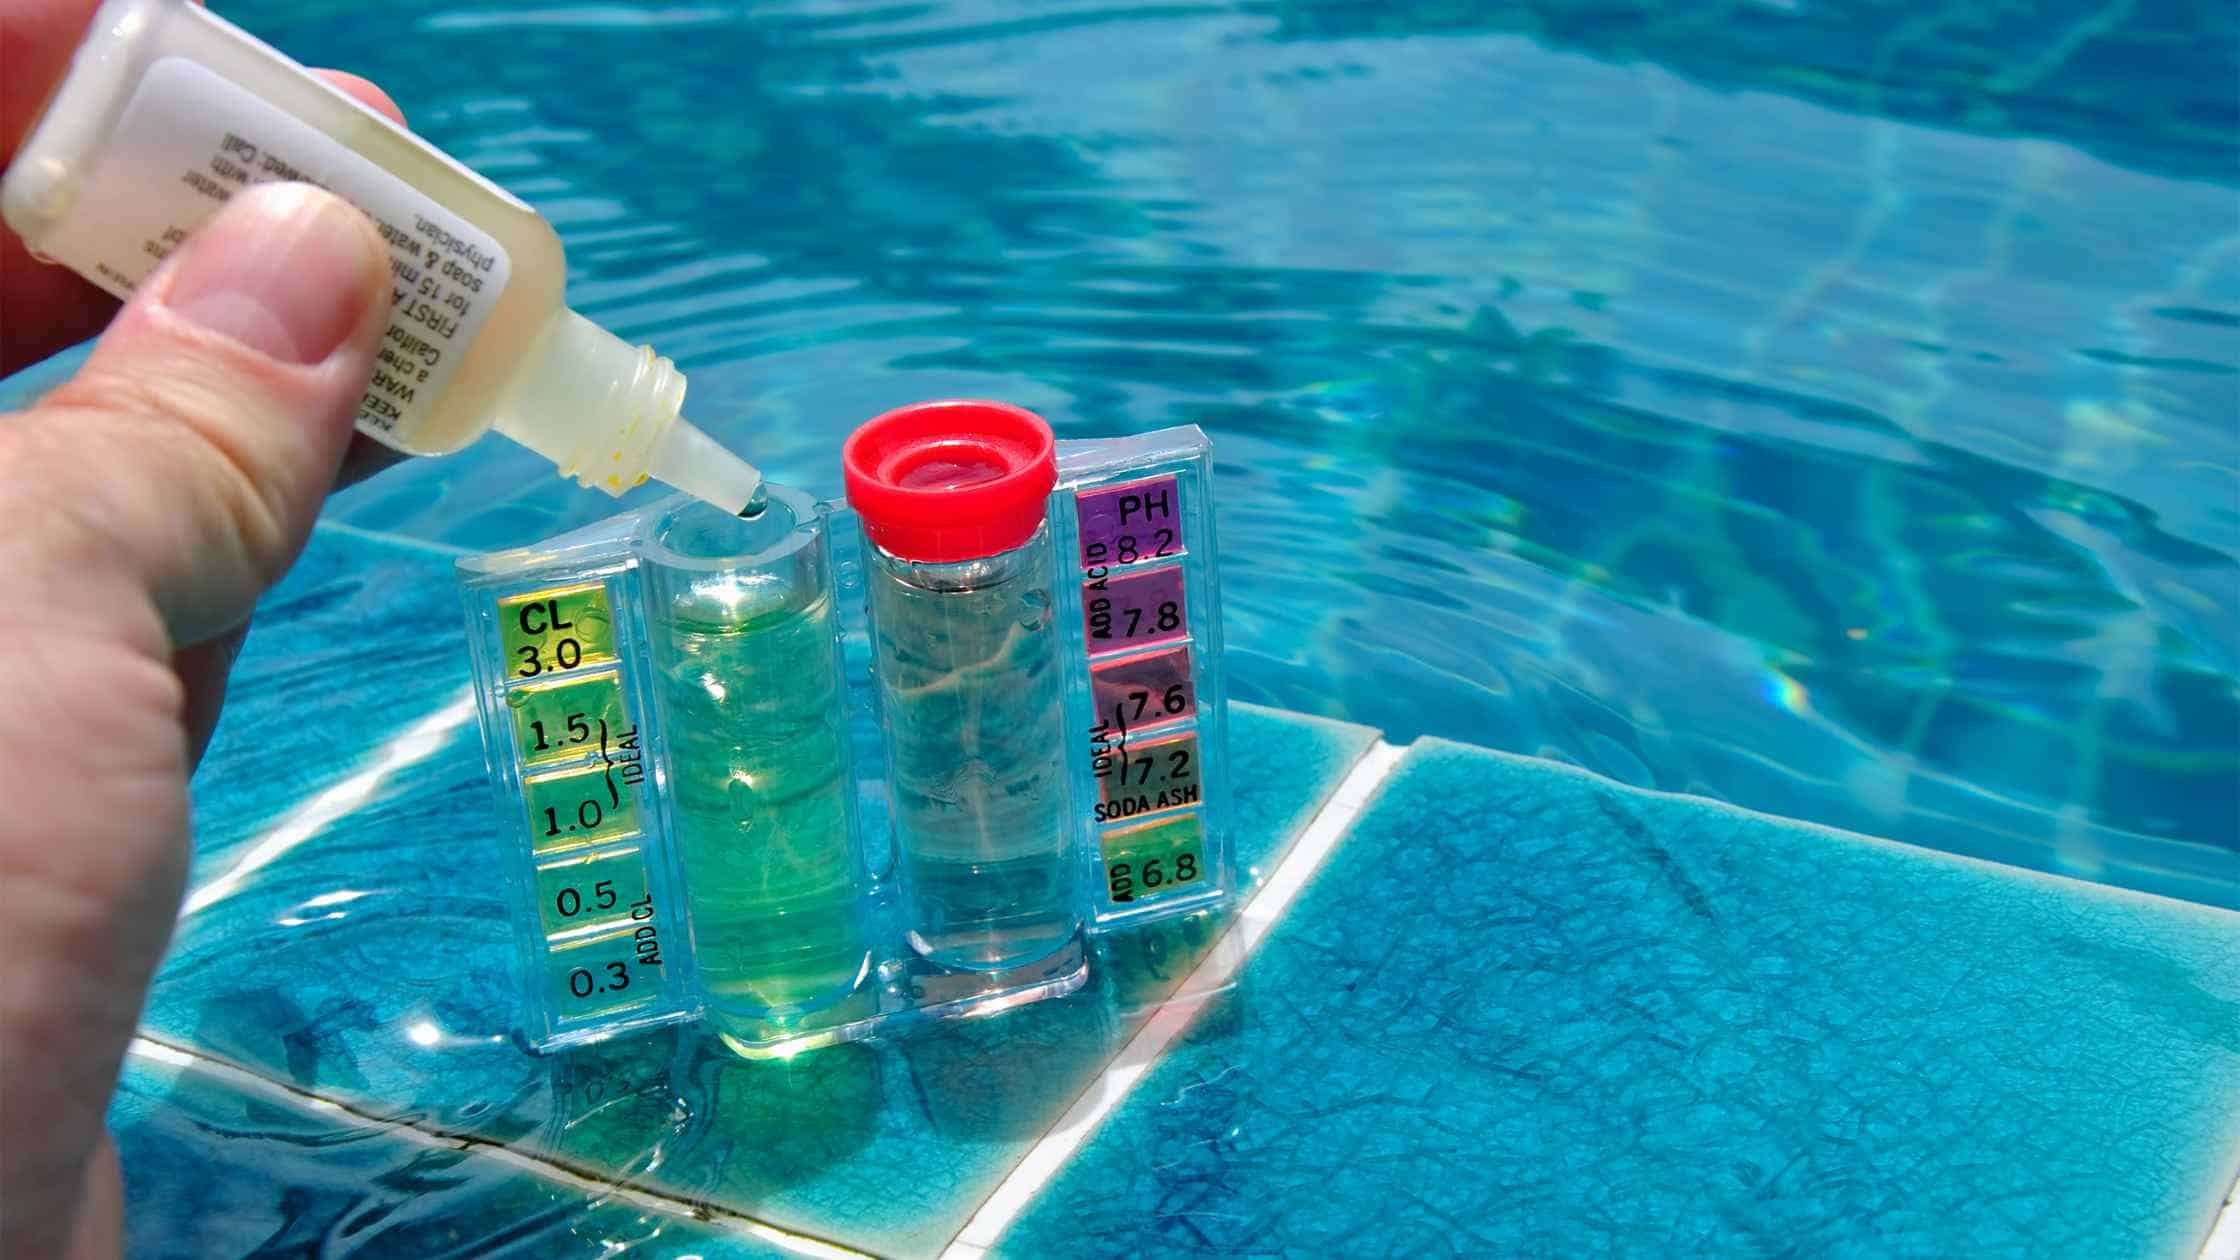 Swimming pool chemicals